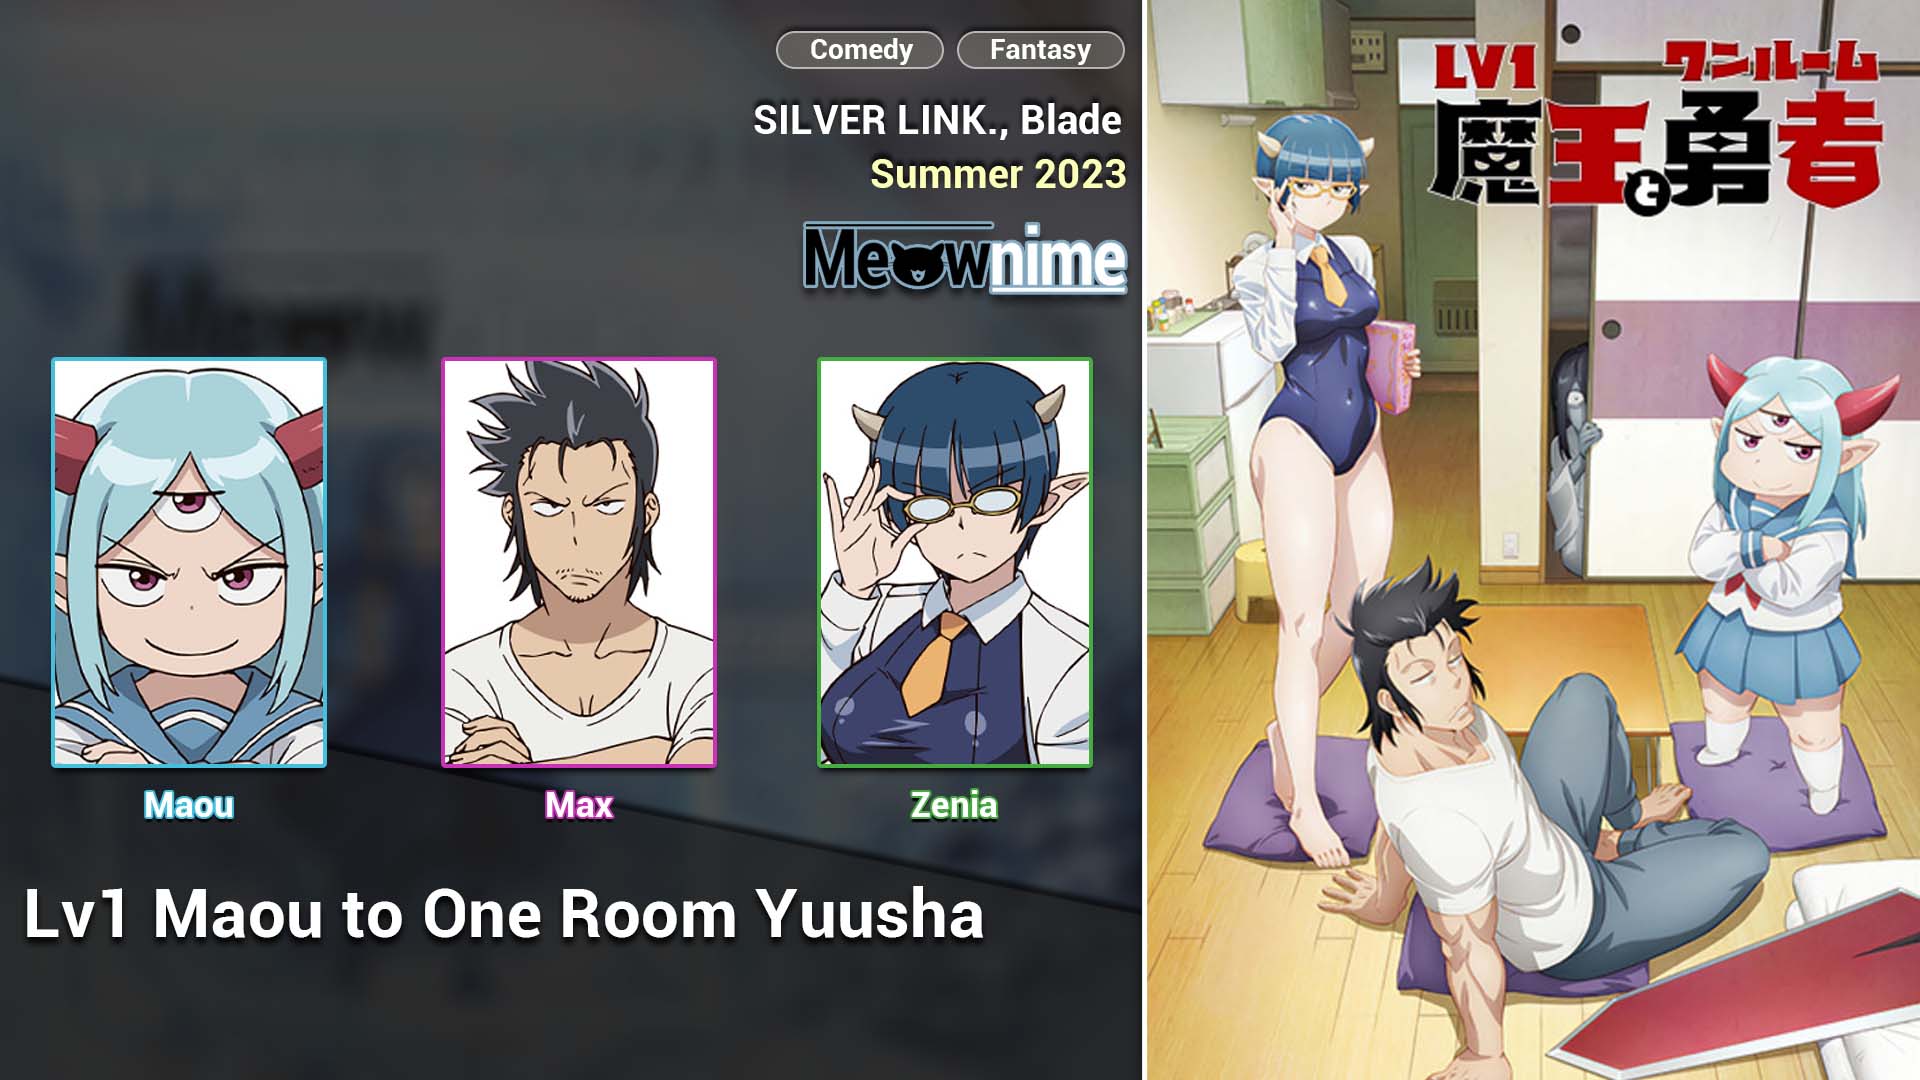 Lv1 Maou to One Room Yuusha